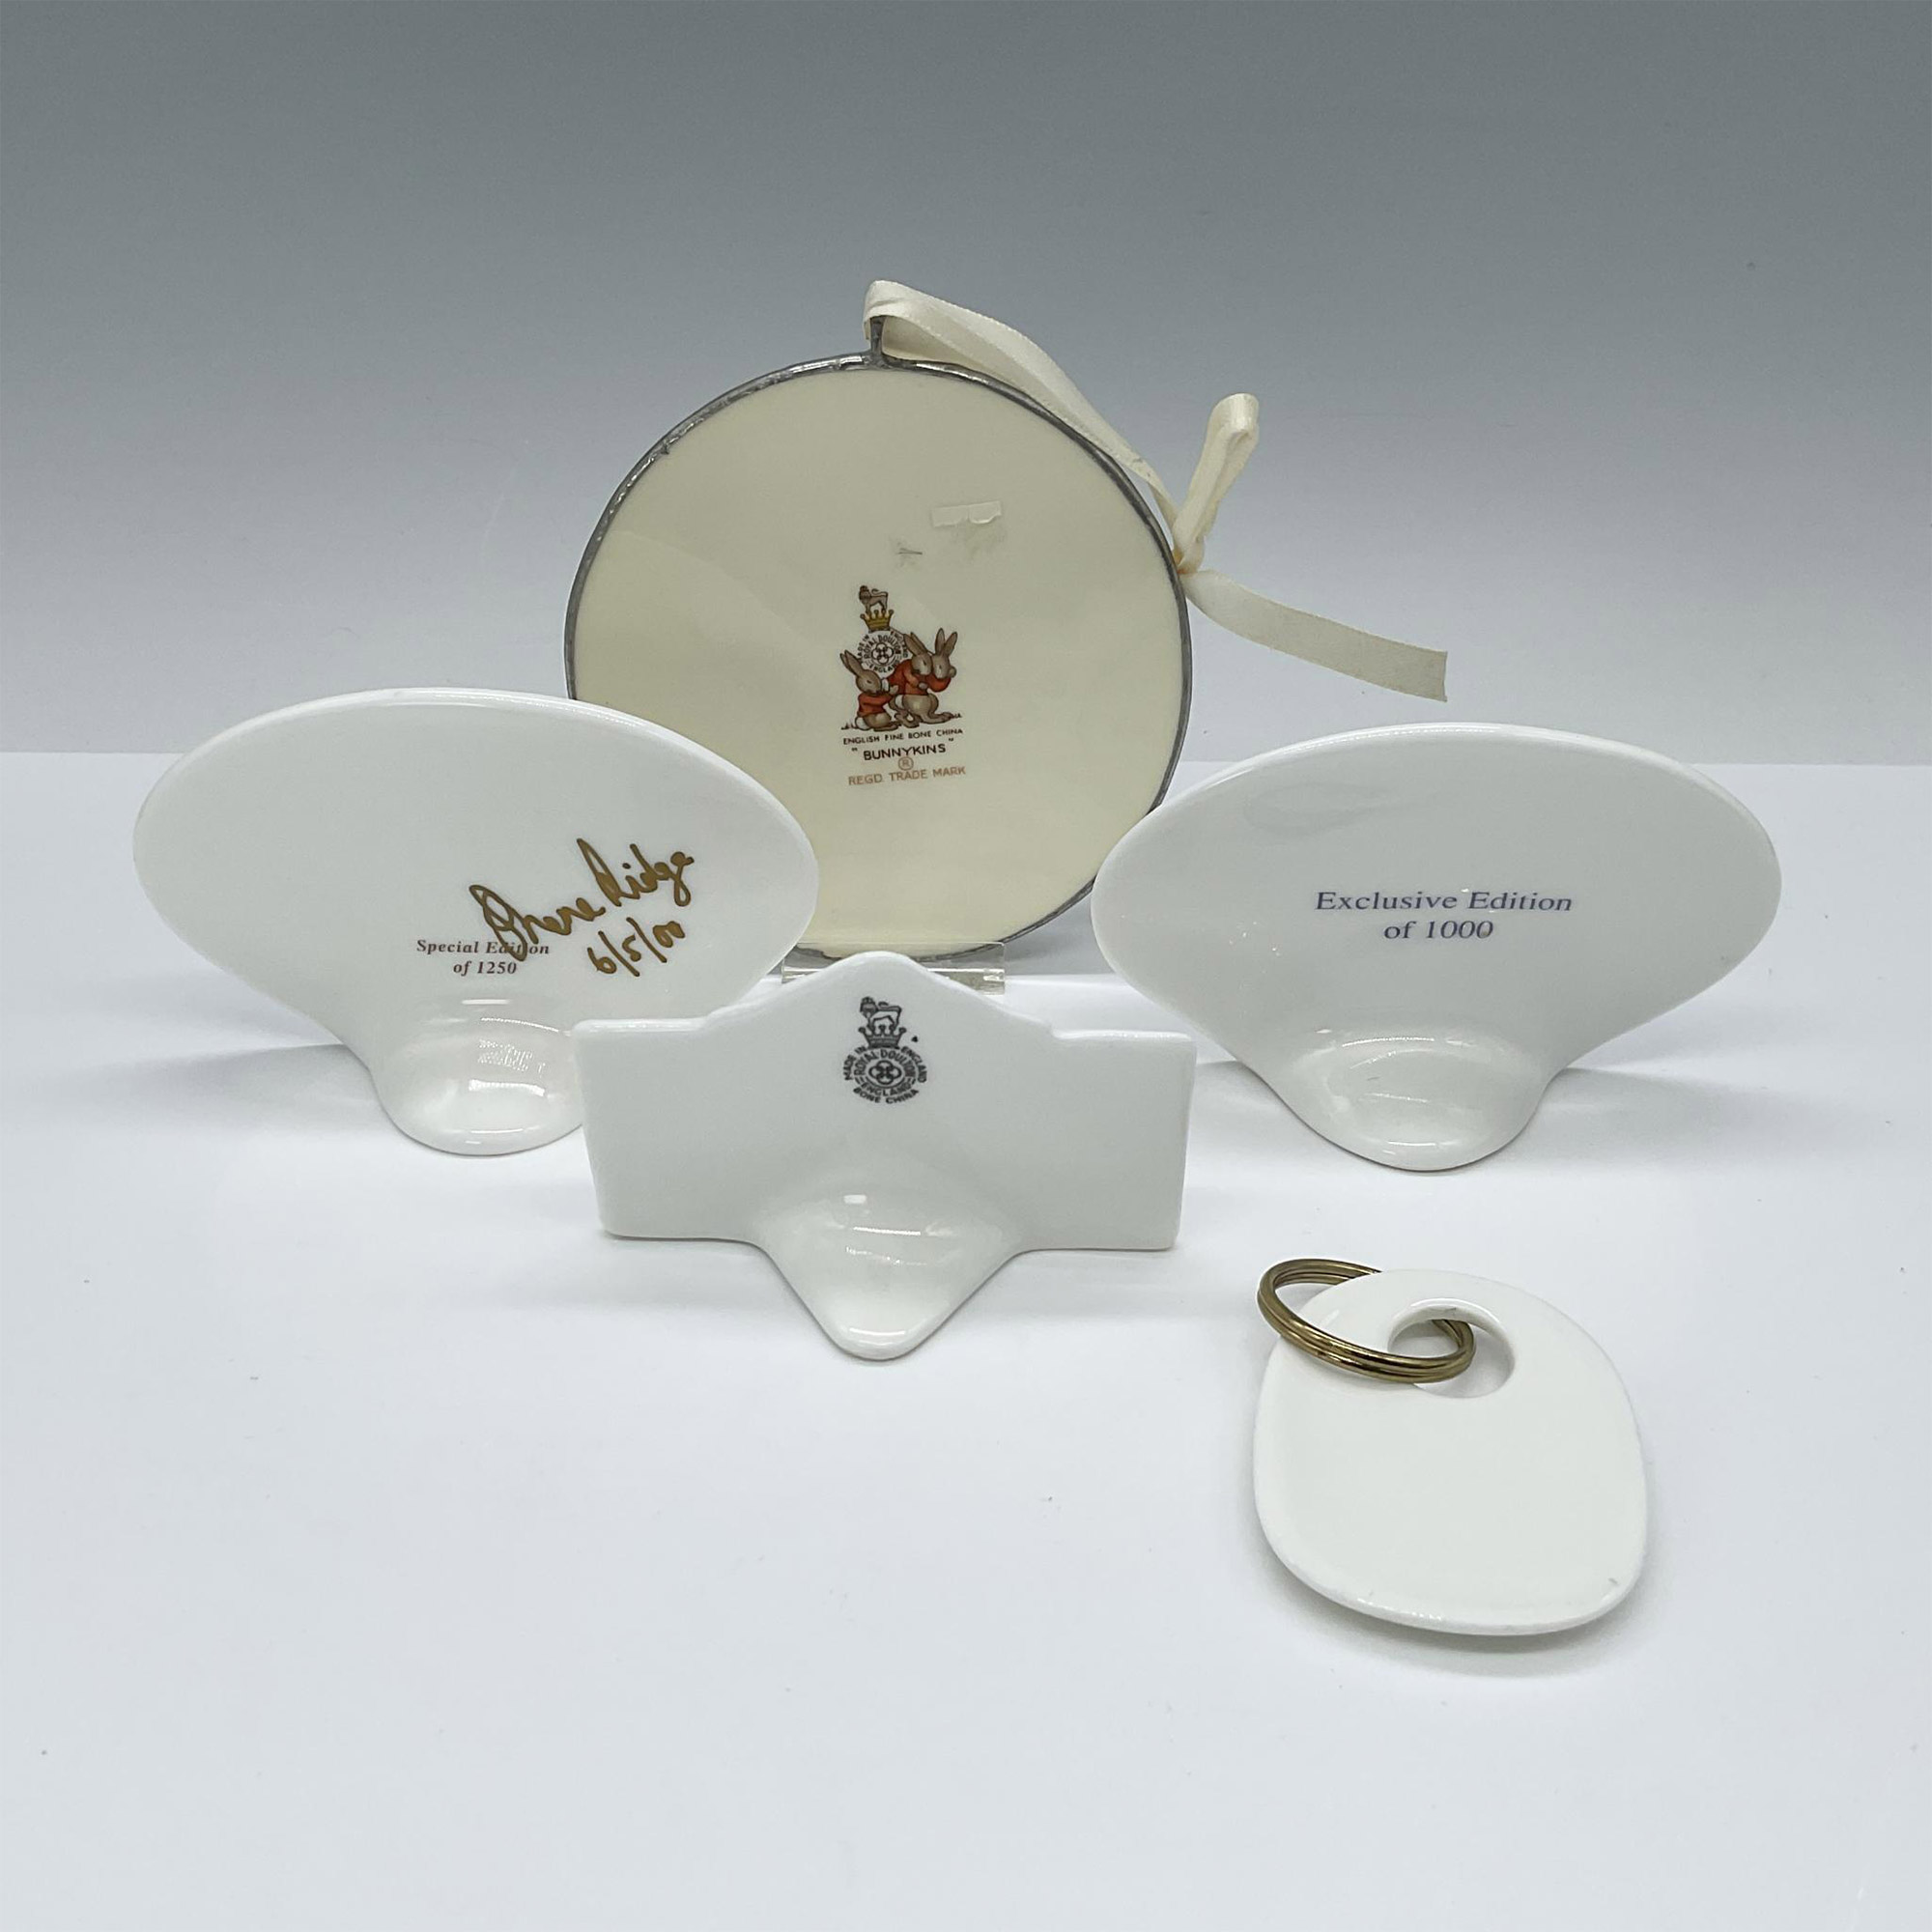 5pc Royal Doulton Bunnykins Porcelain Grouping - Image 2 of 3